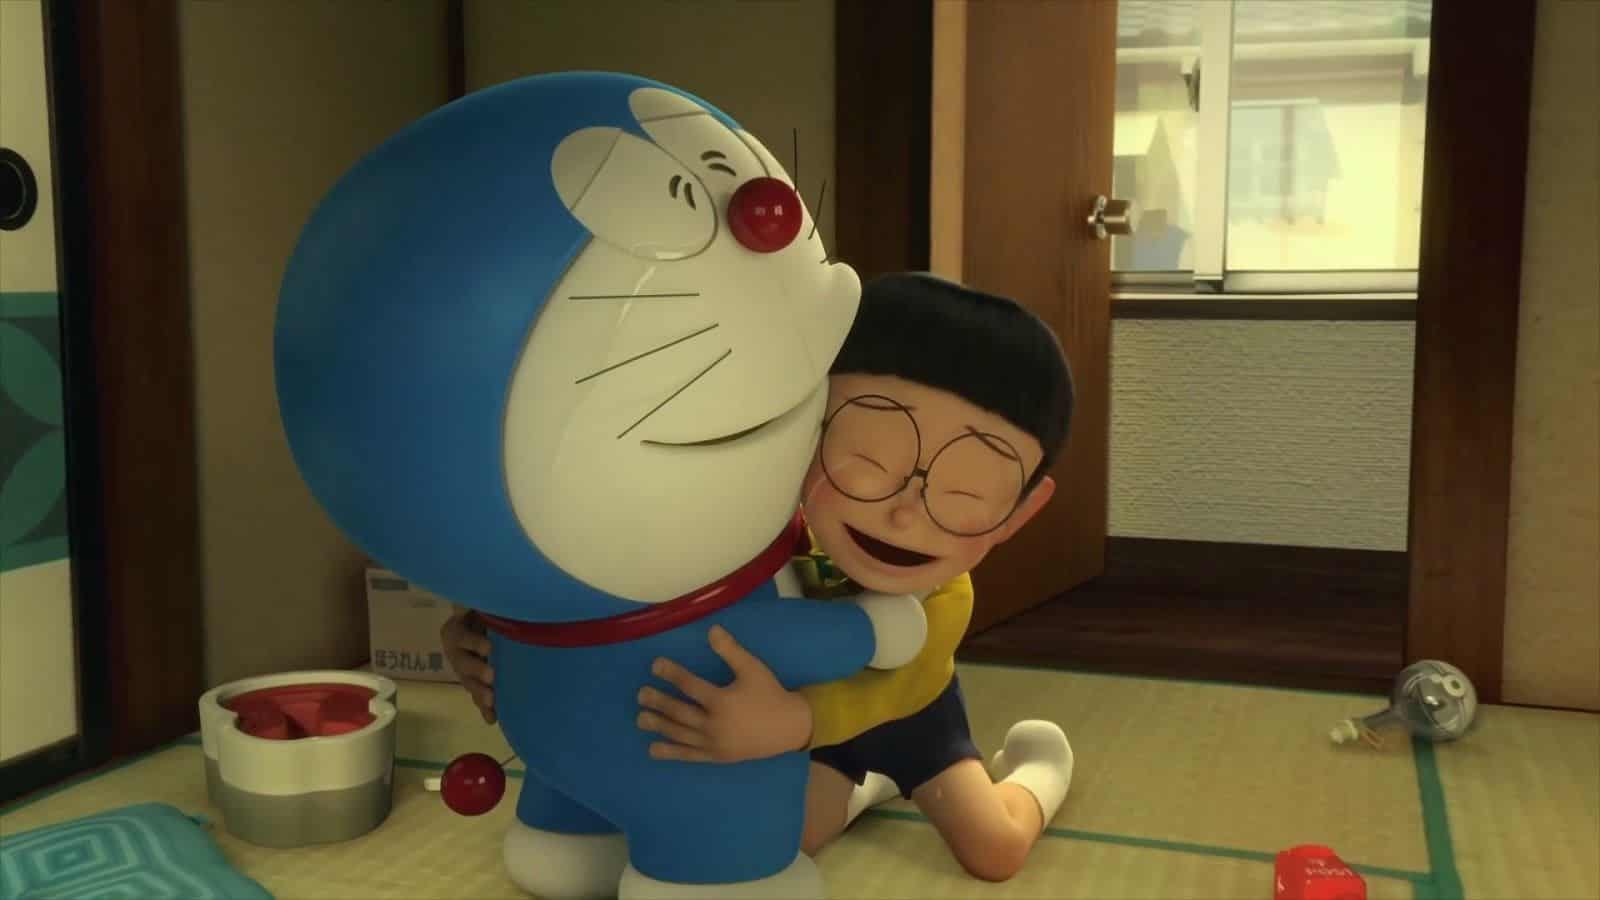 Photos of Doraemon and Nobita